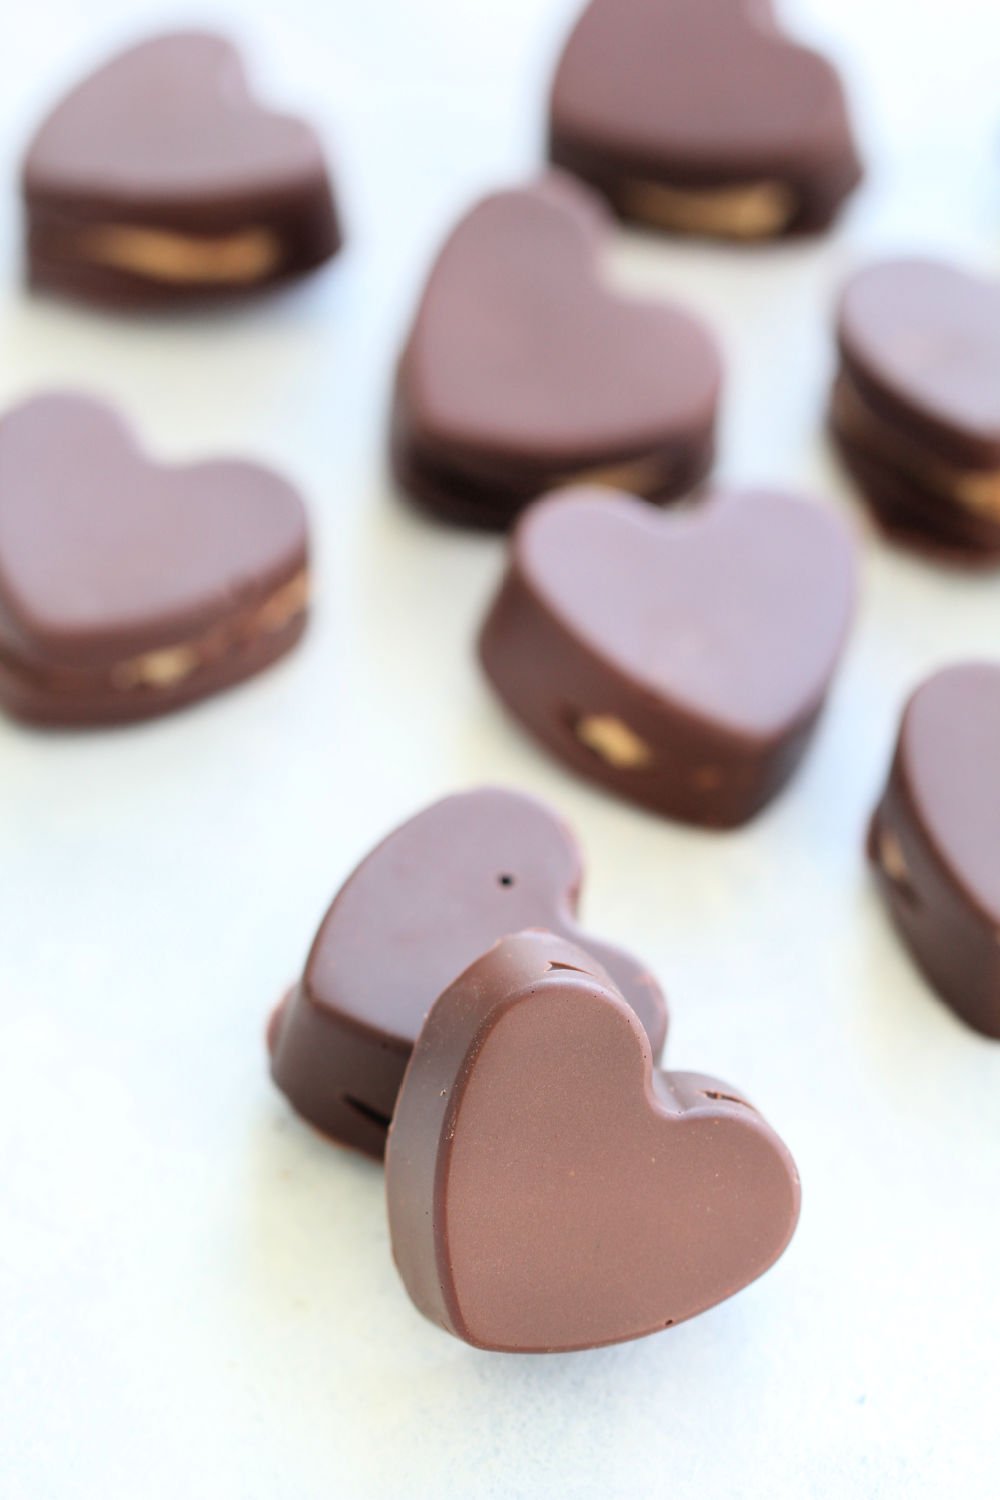 Peanut Butter Chocolate Hearts Recipe (Homemade Reese’s)